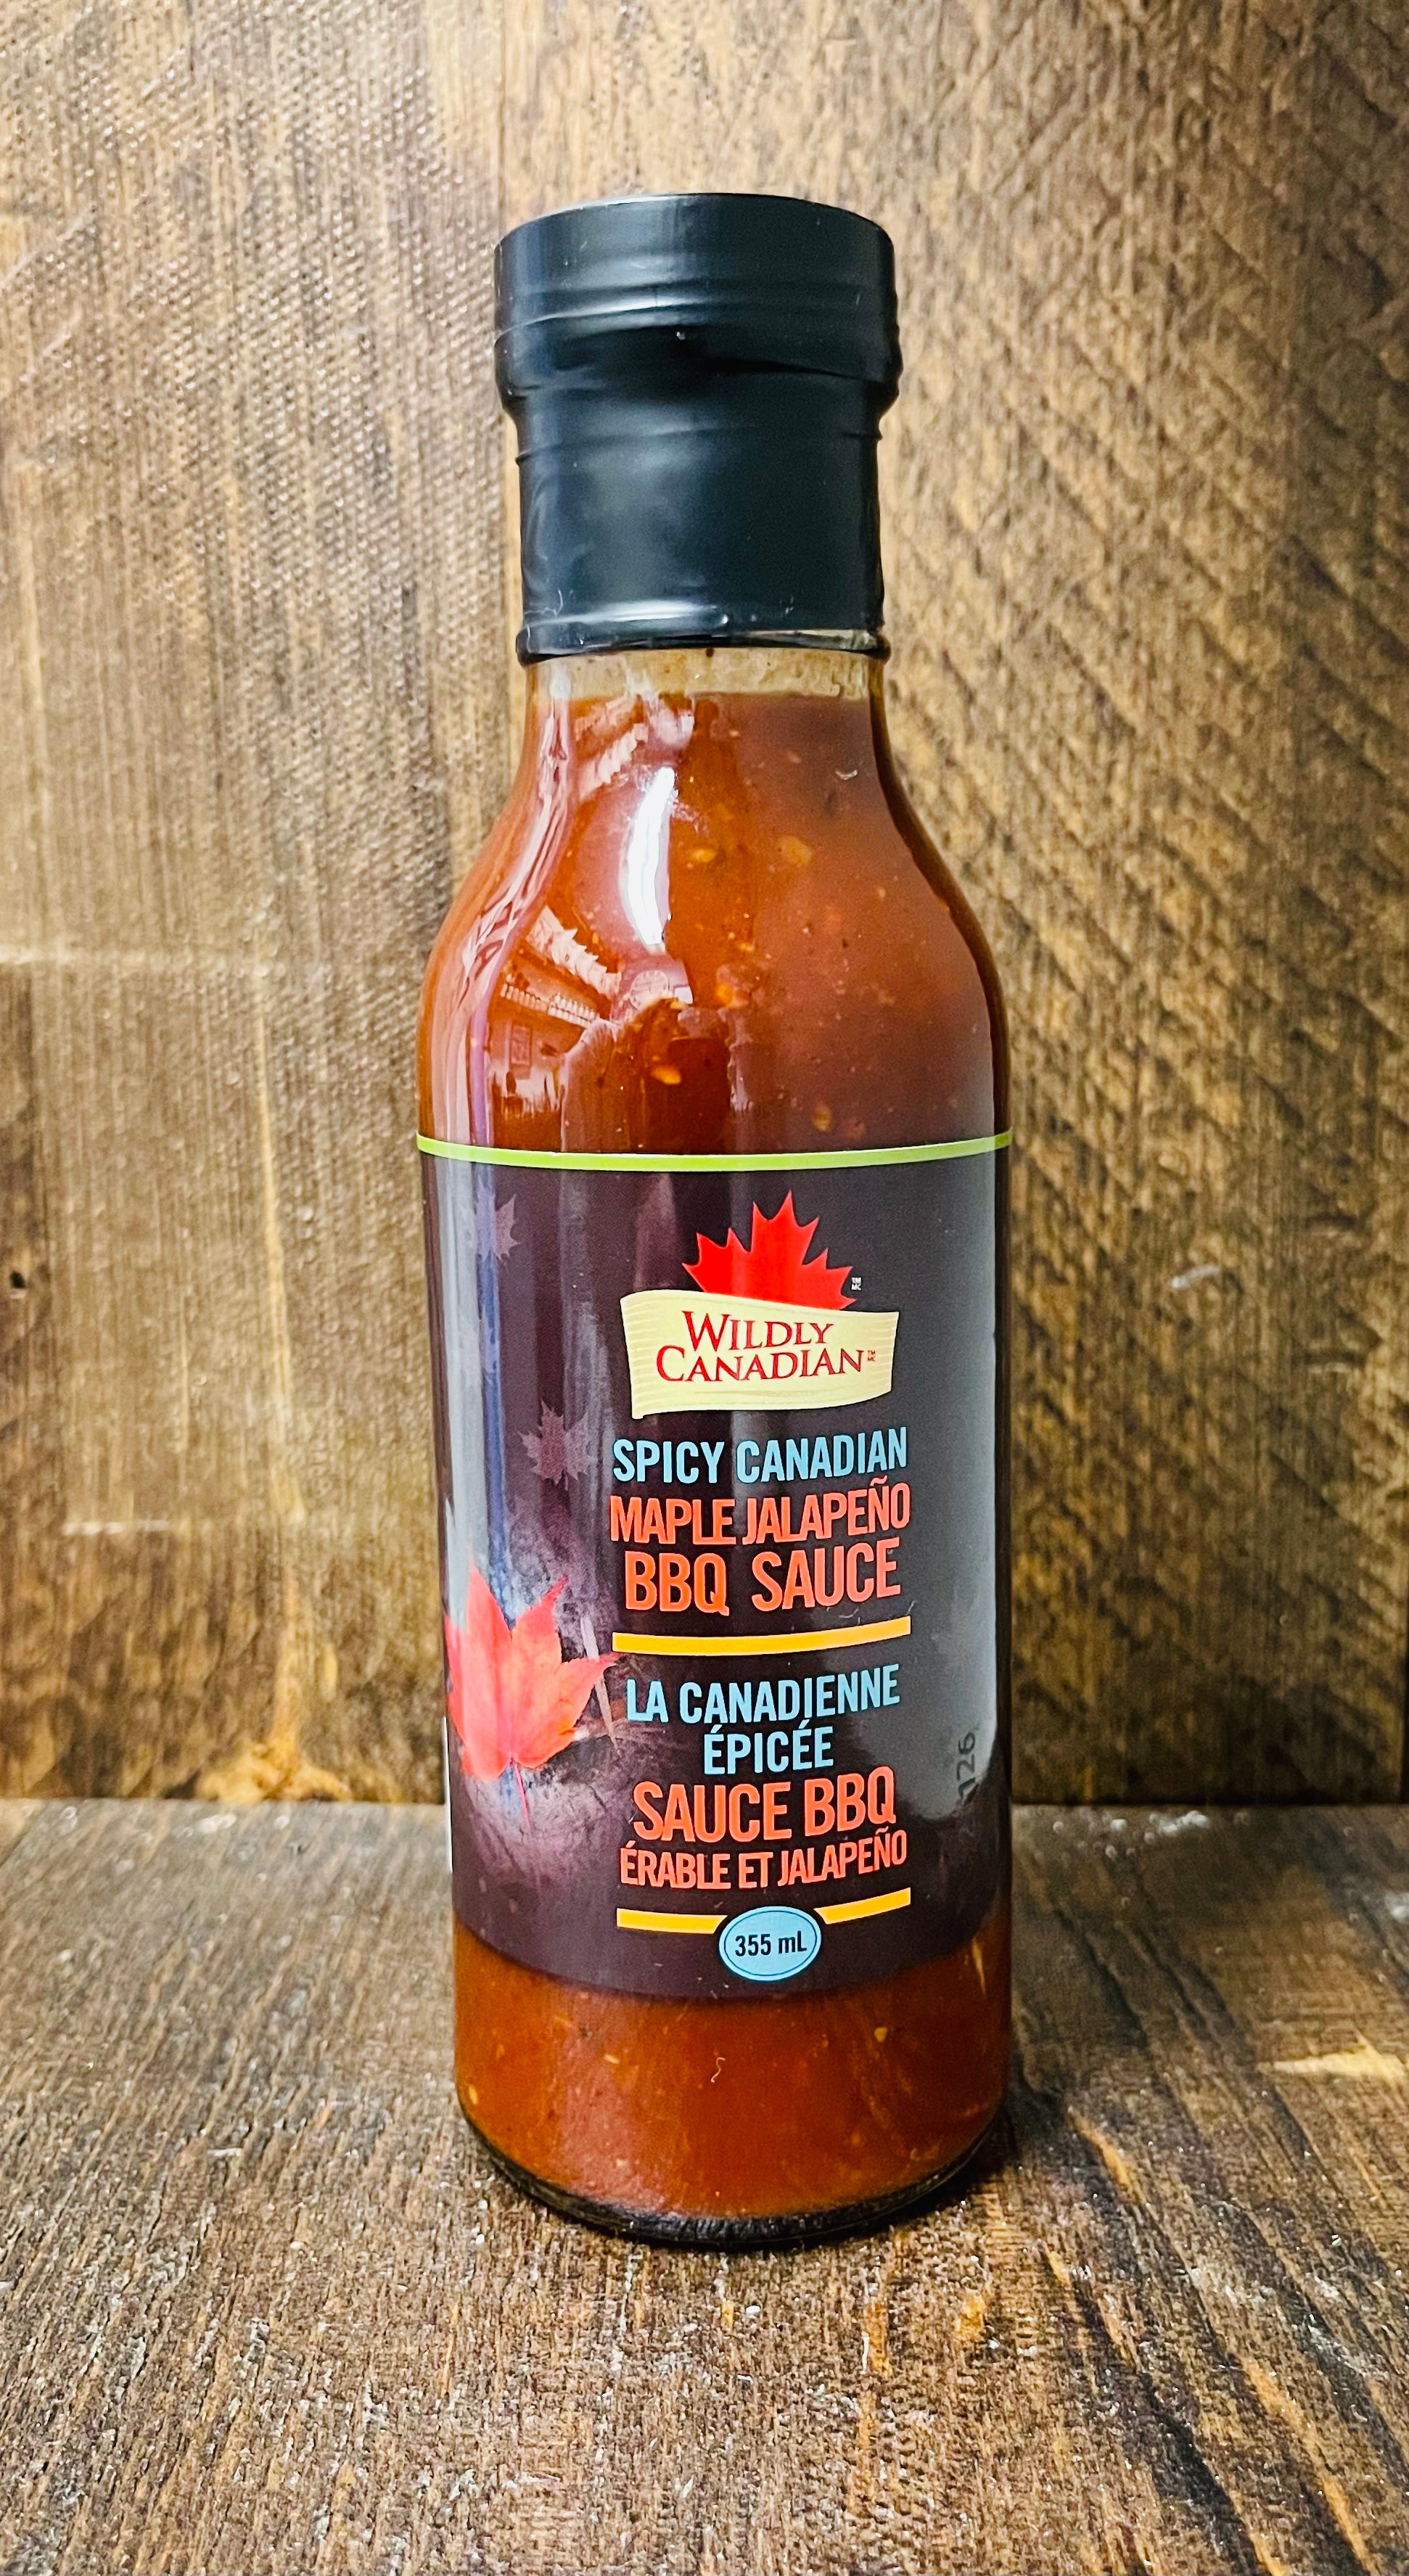 Spicy Canadian Maple Jalapeño BBQ Sauce